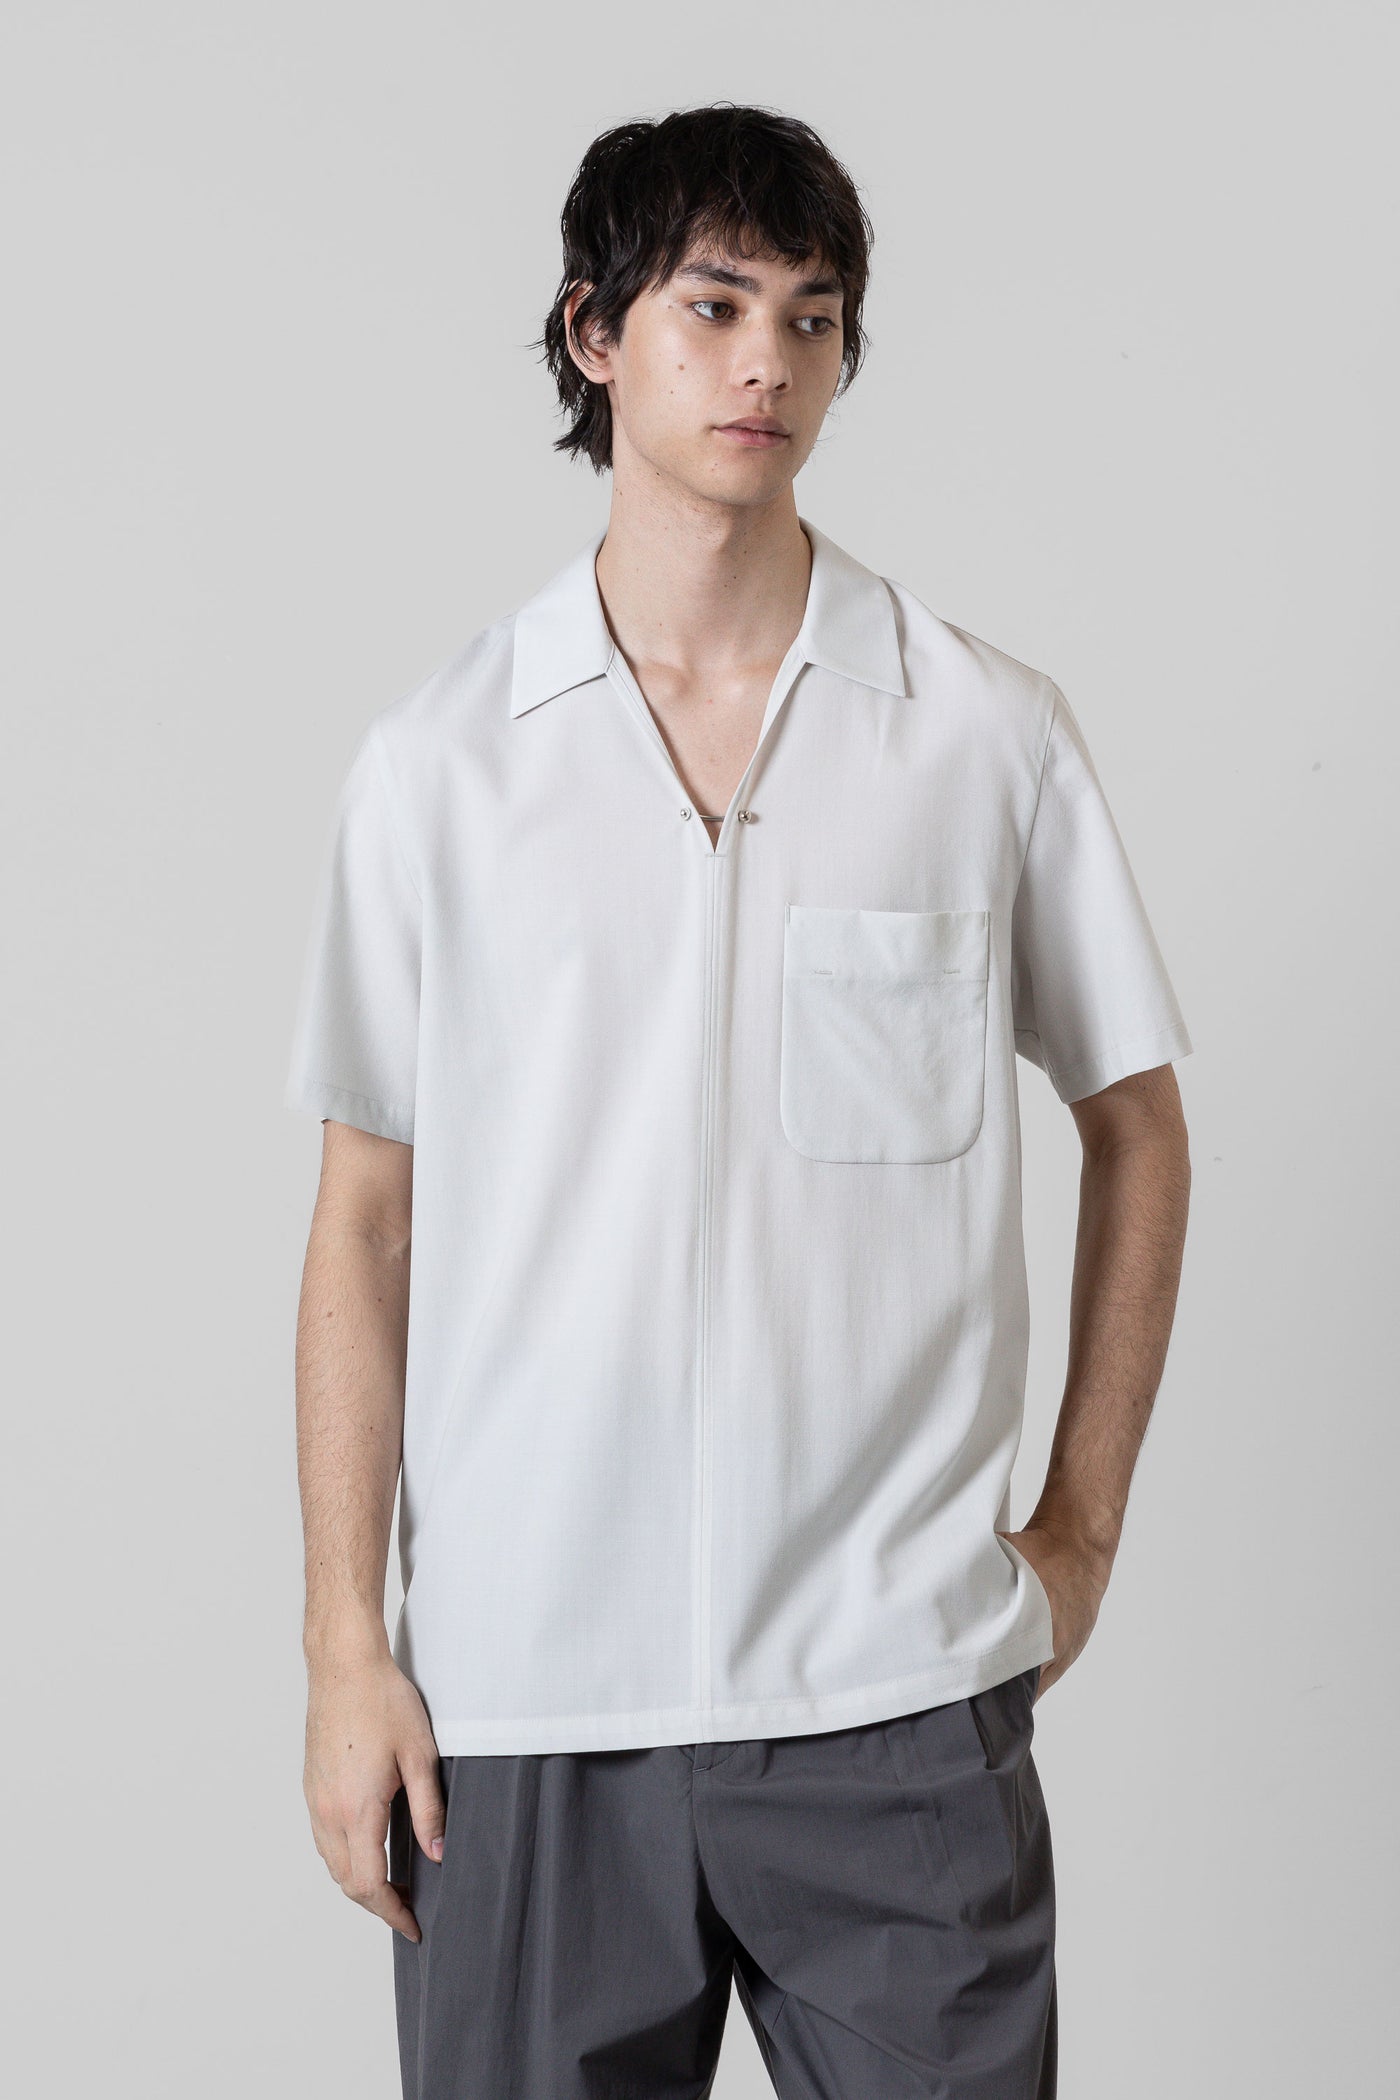 Released in February AS41-050 Wool Tropical Skipper Shirt S/S